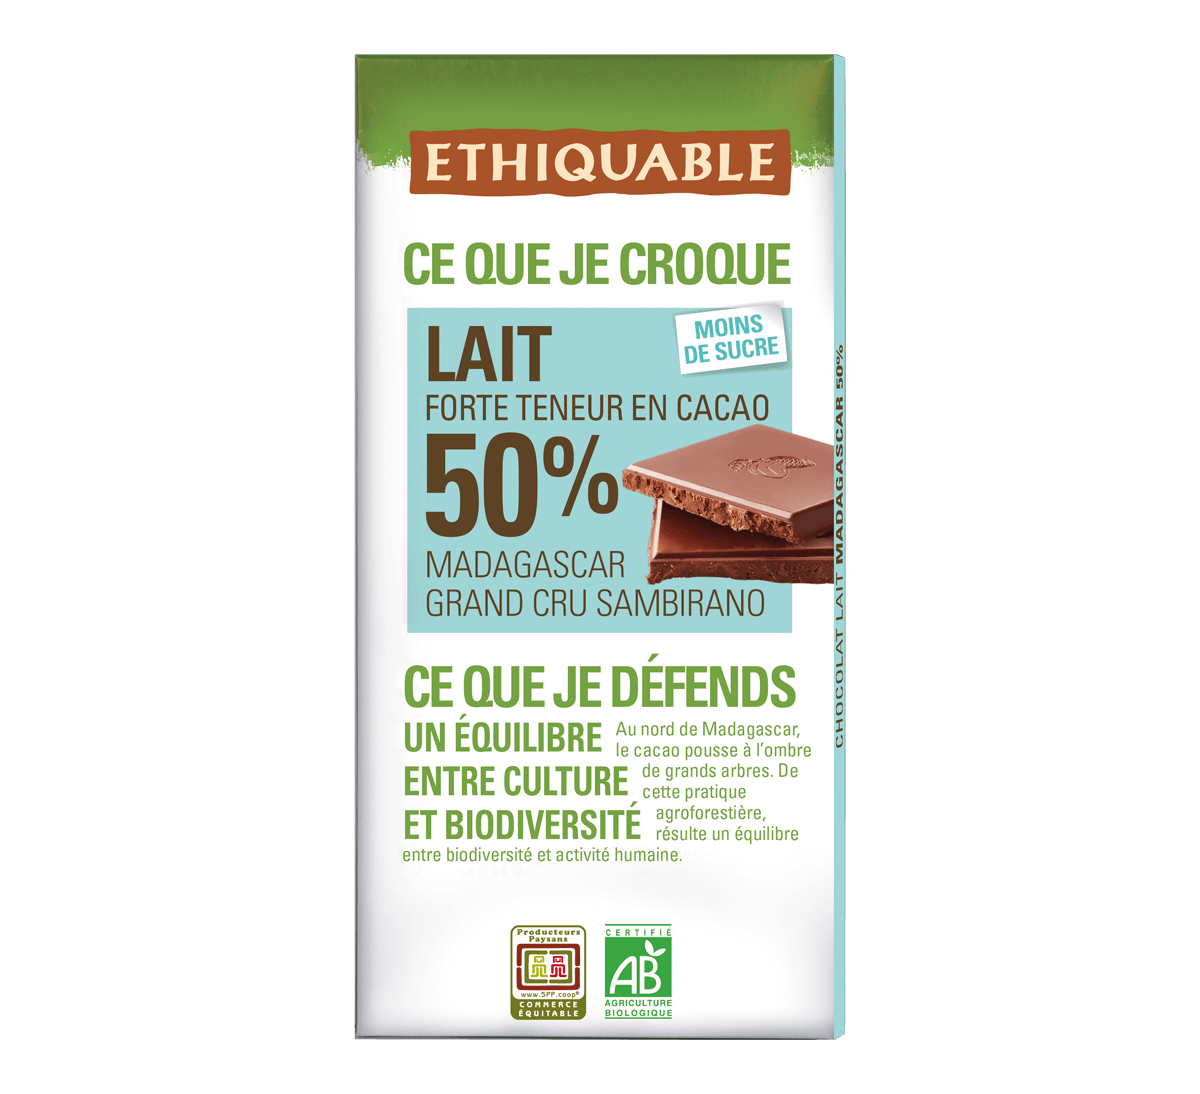 Tablette chocolat au lait 50% de cacao bio et équitable de Madagascar. Grand cru Sambirano